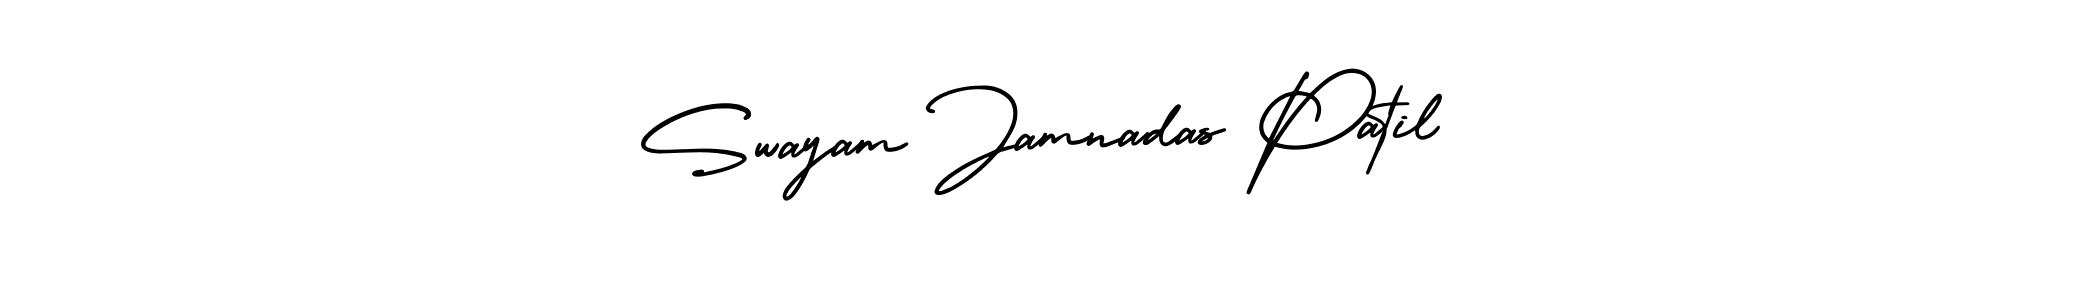 Best and Professional Signature Style for Swayam Jamnadas Patil. AmerikaSignatureDemo-Regular Best Signature Style Collection. Swayam Jamnadas Patil signature style 3 images and pictures png